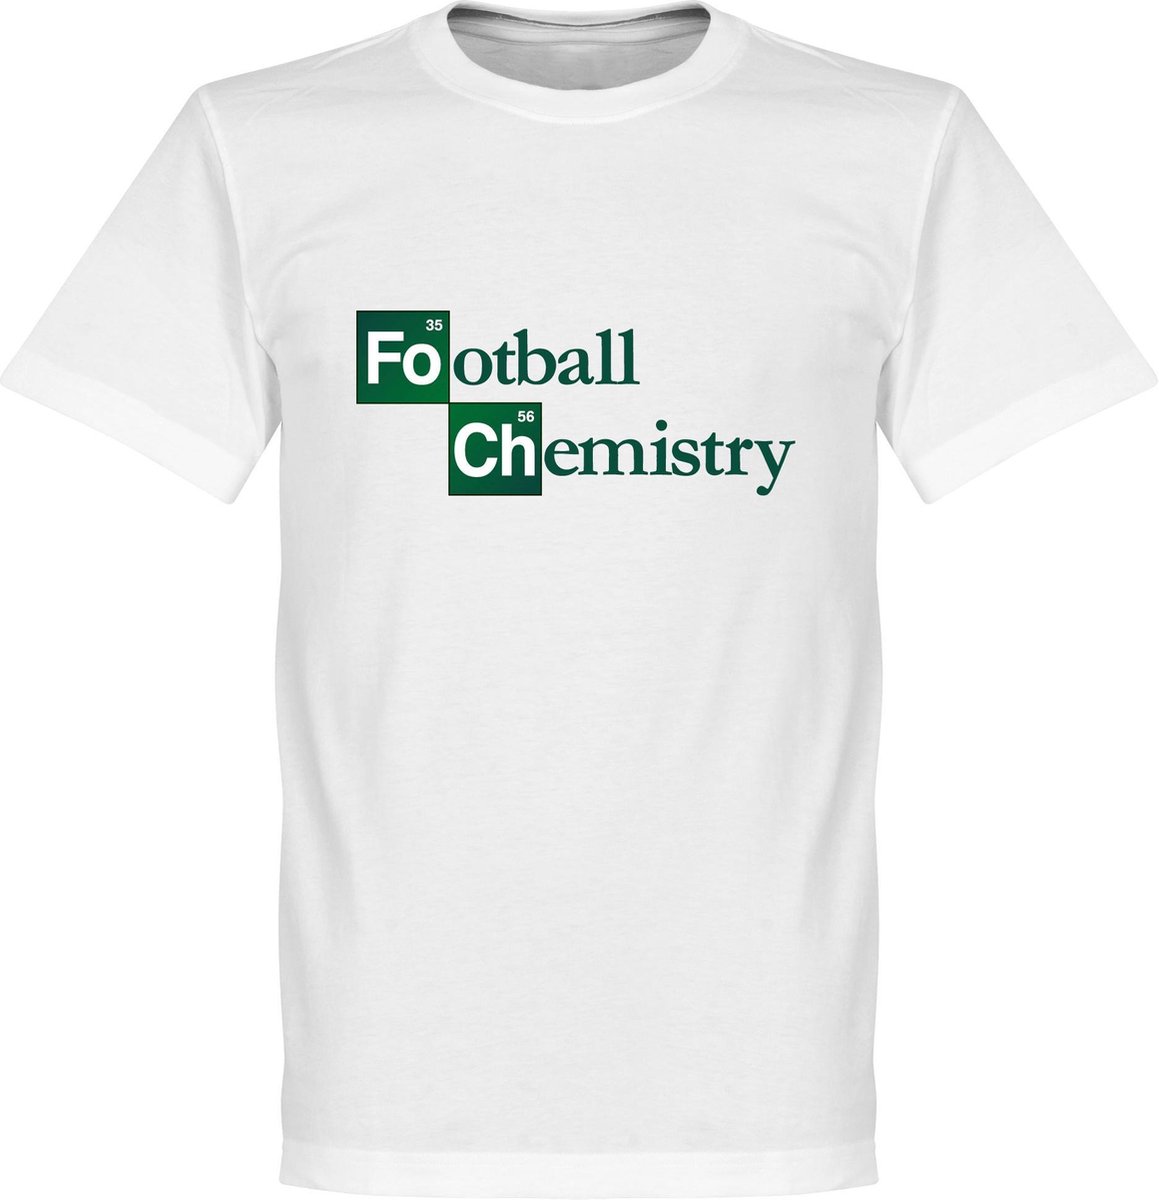 Football Chemistry T-Shirt - M